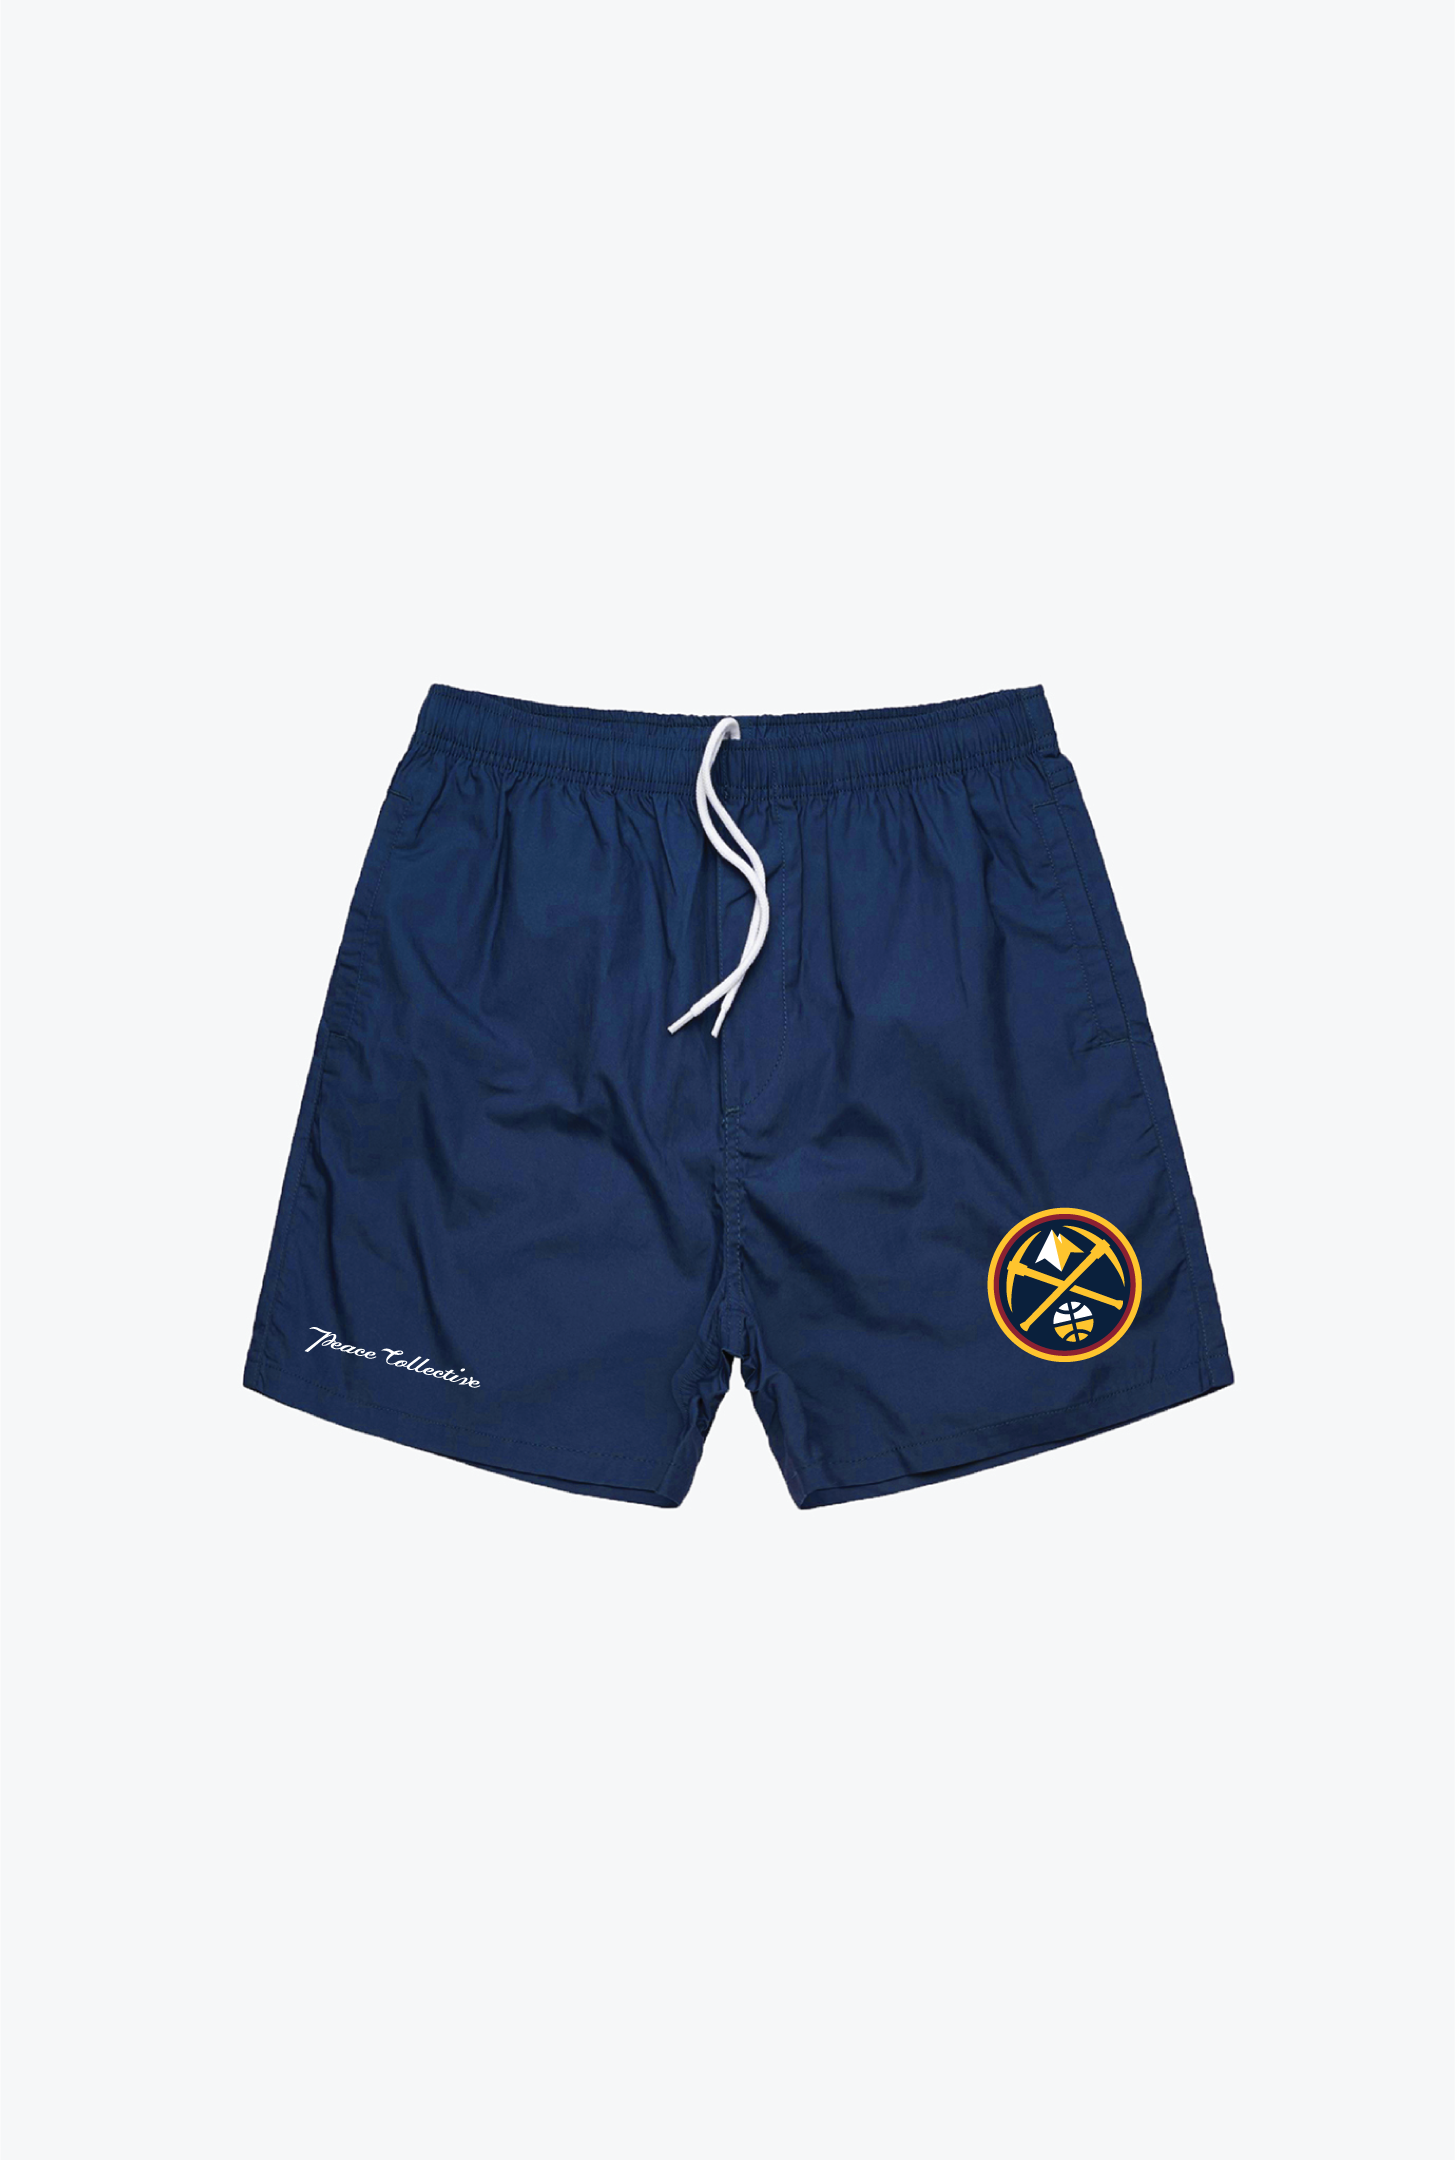 Denver Nuggets Board Shorts - Navy